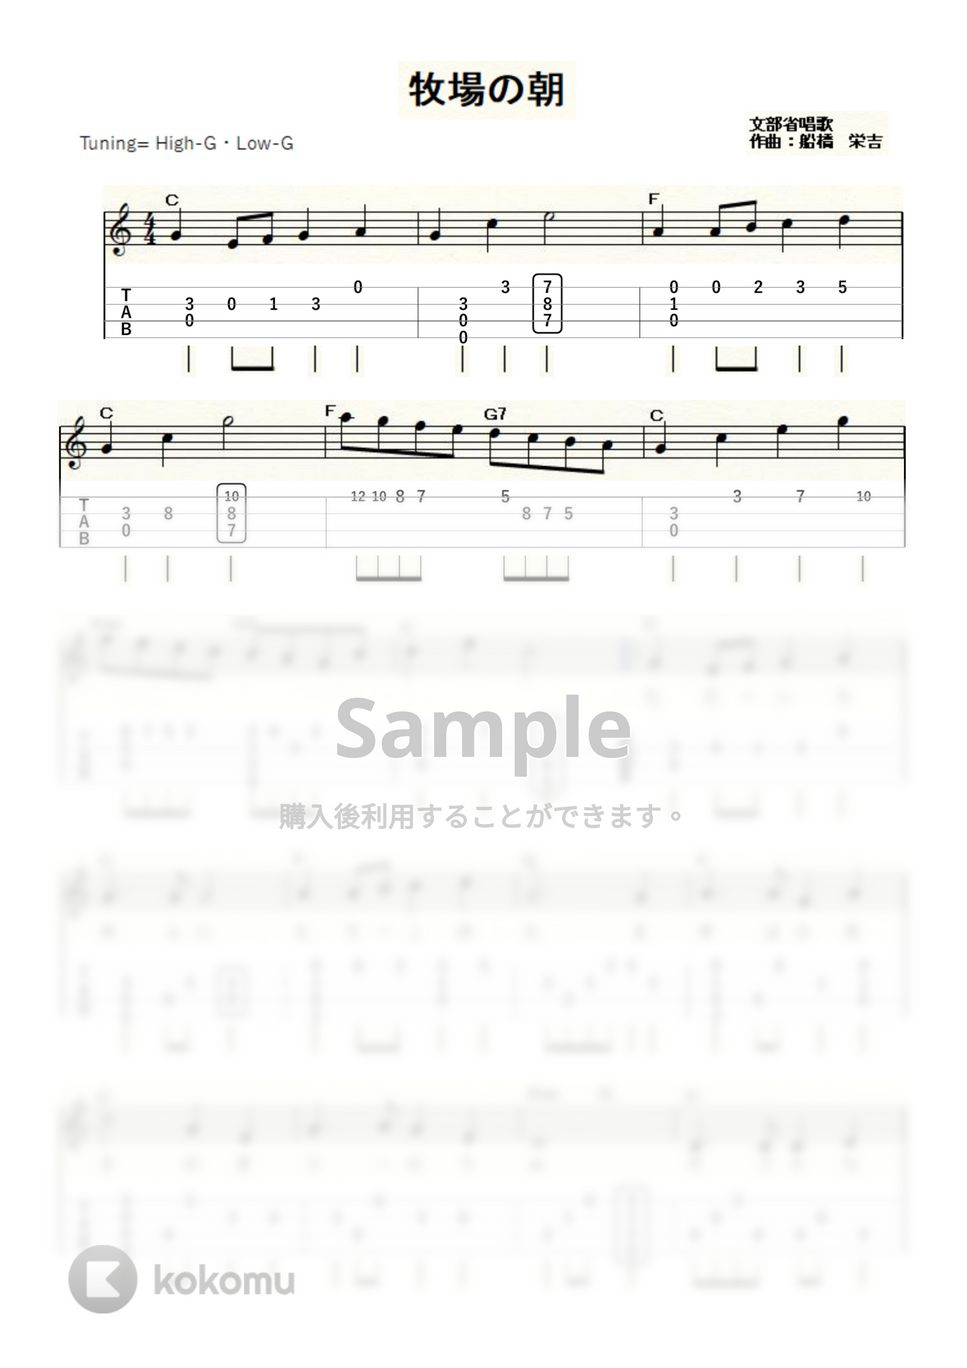 牧場の朝(原曲) (ｳｸﾚﾚｿﾛ / High-G,Low-G / 中級) by ukulelepapa